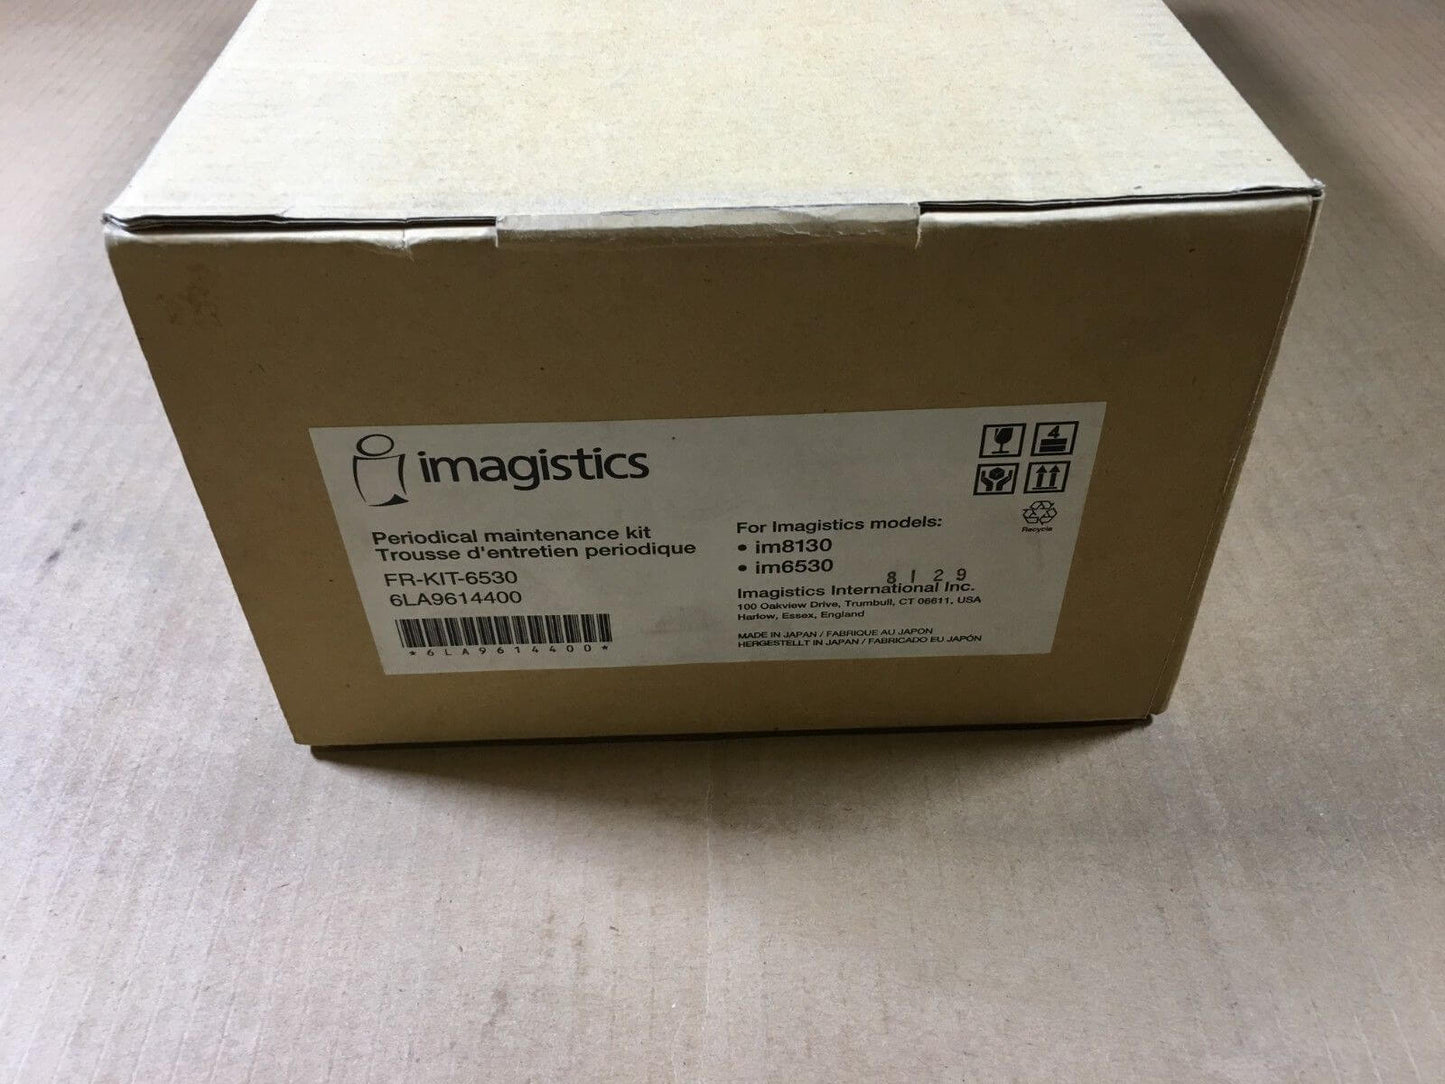 Genuine Oce Imagistics Periodical Maintenance Kit FR-KIT-6530 for im8130 im6530 - copier-clearance-center